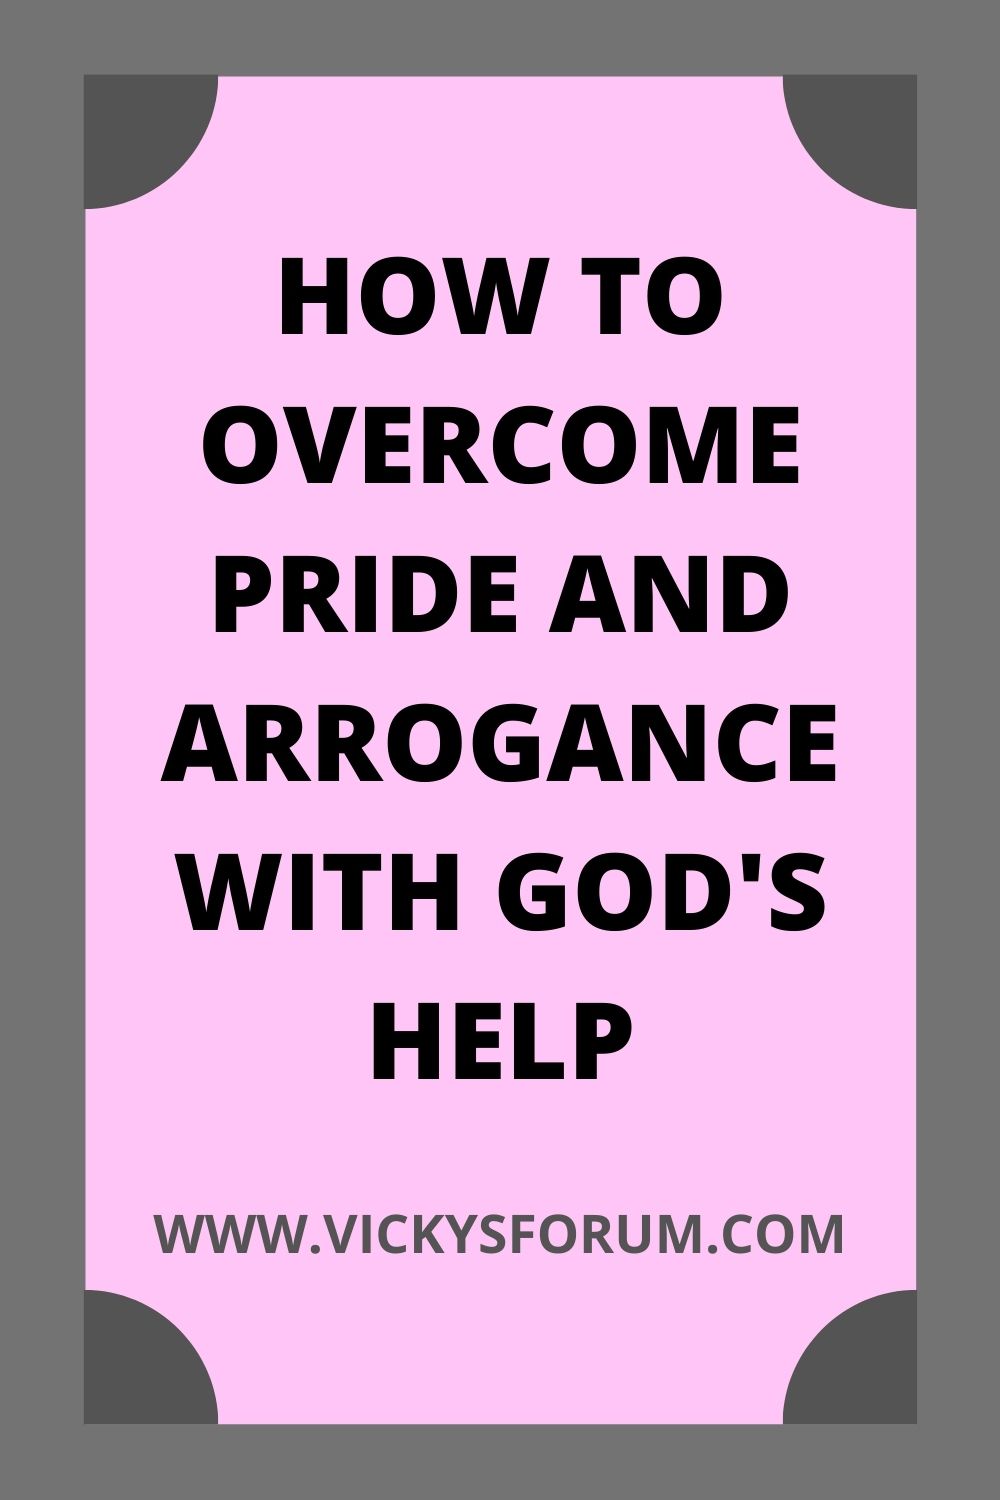 Avoid pride and arrogance